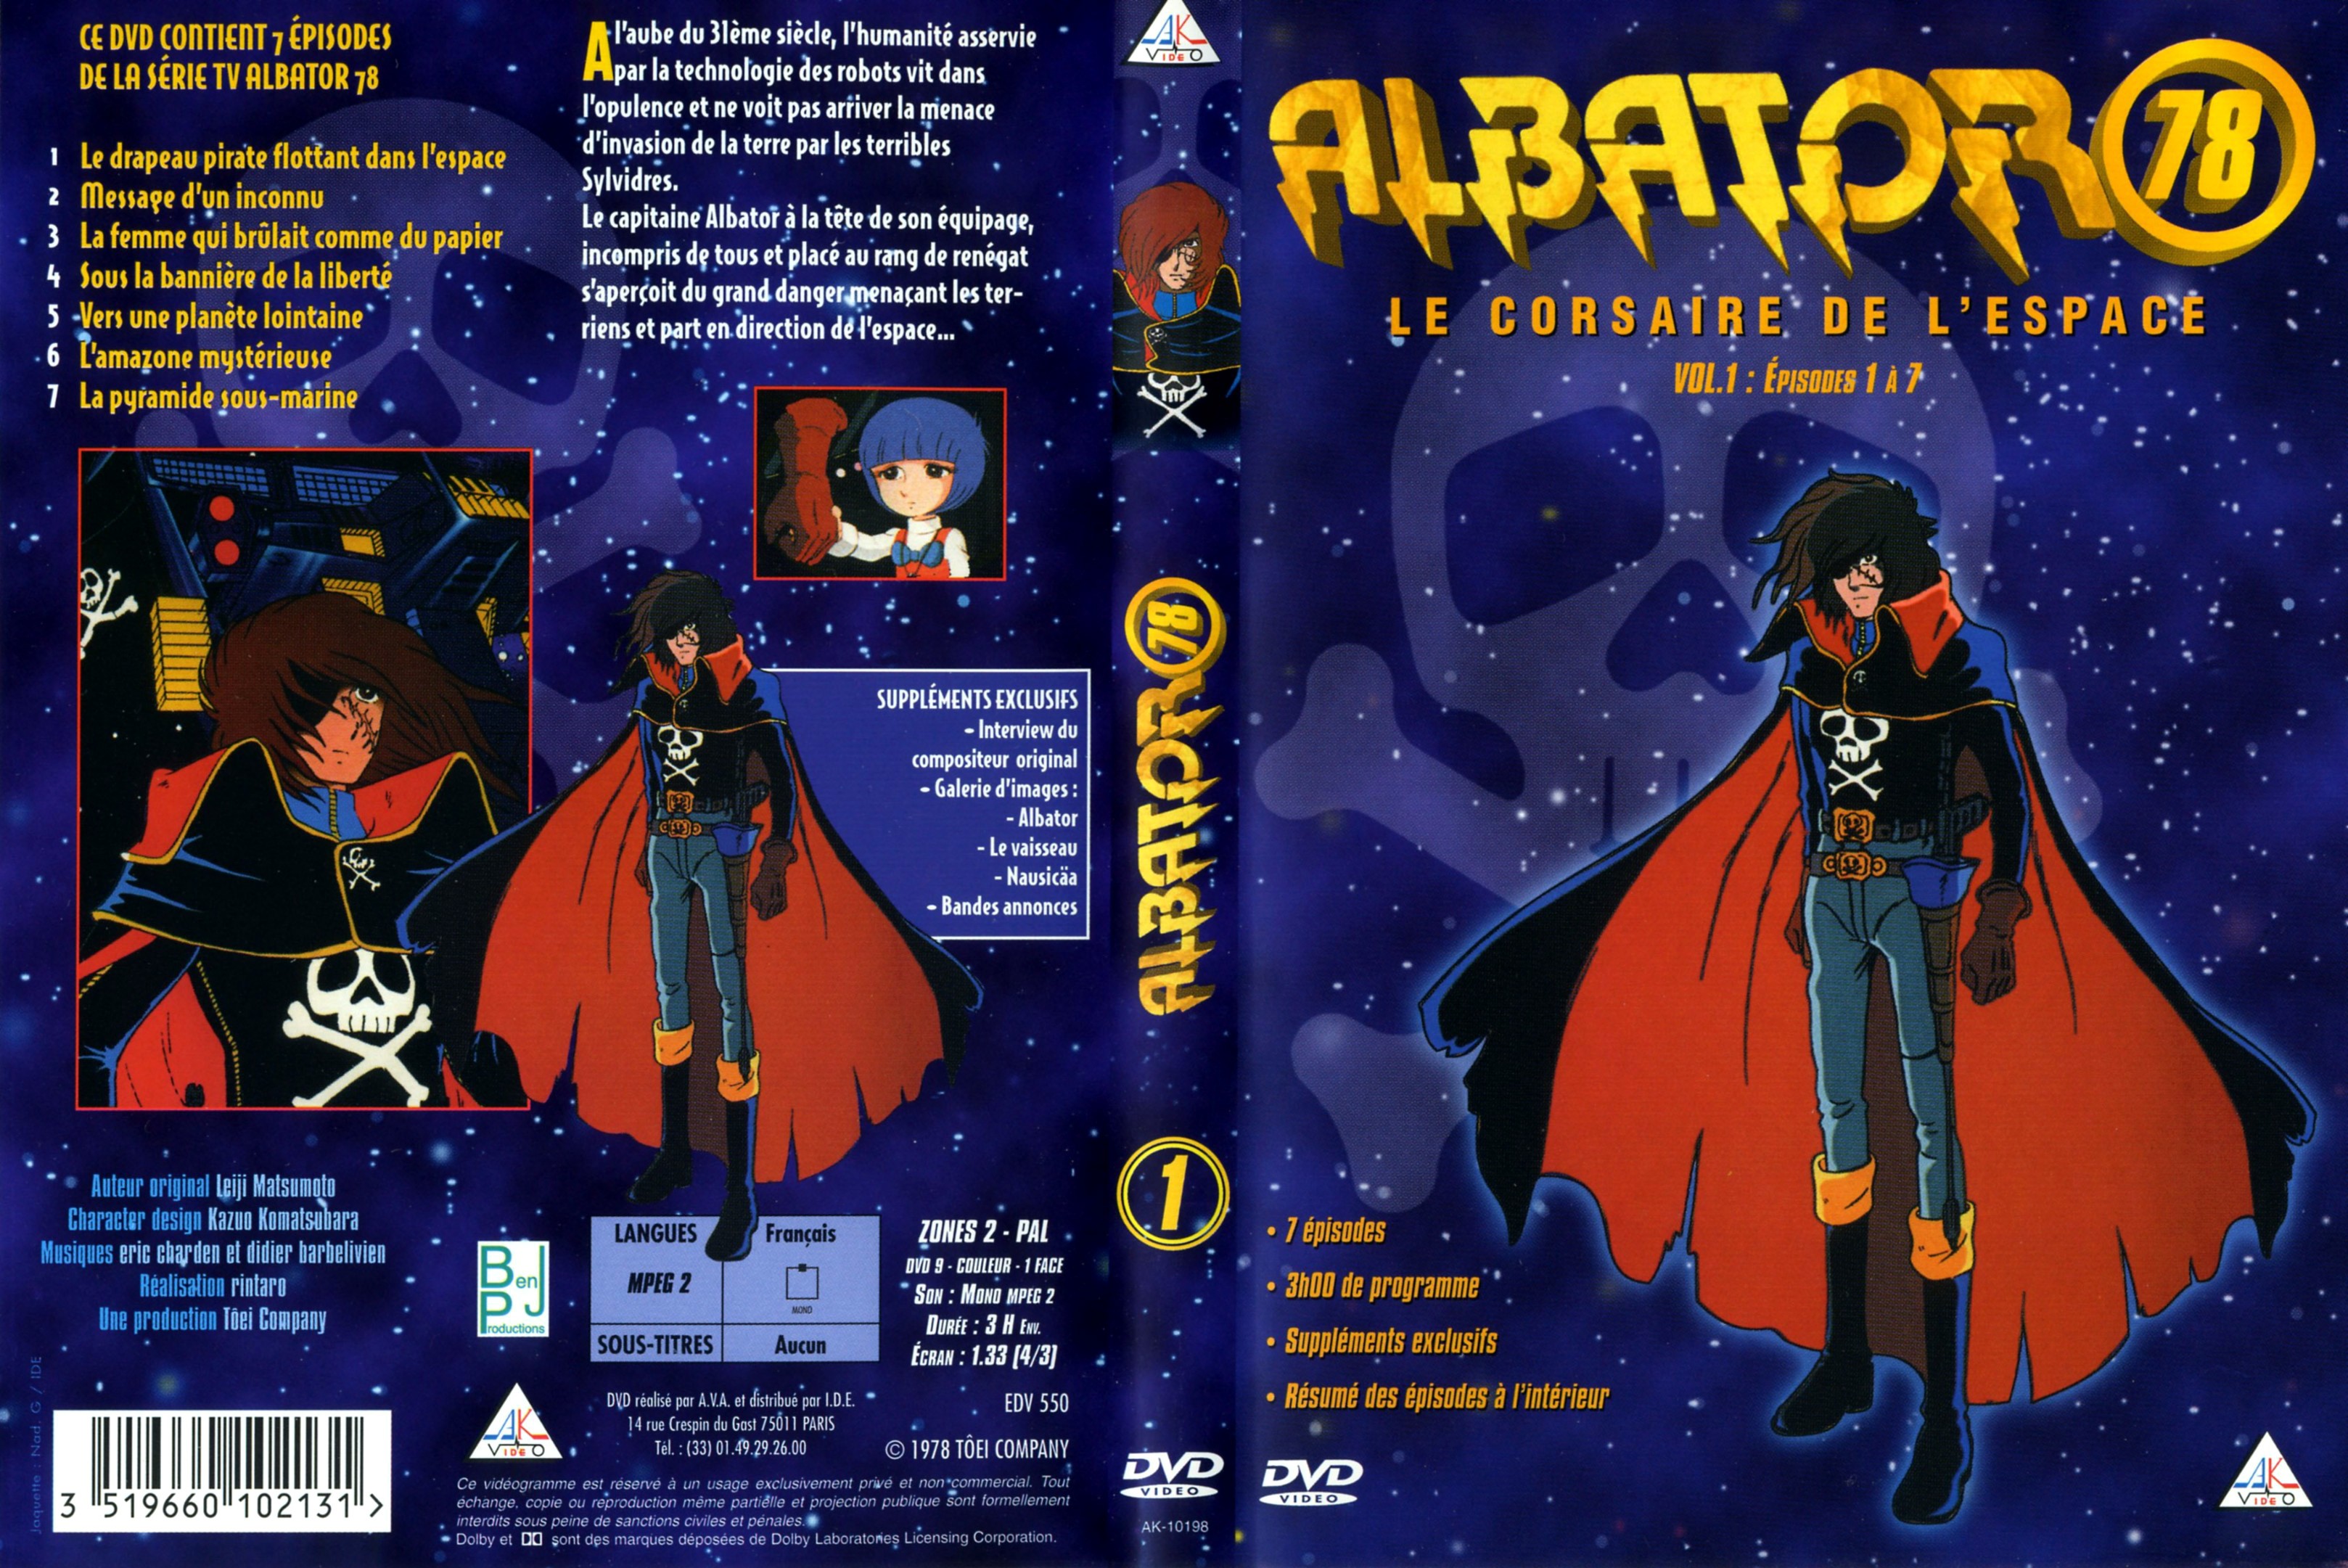 Jaquette DVD Albator 78 vol 1 (AK VIDEO)